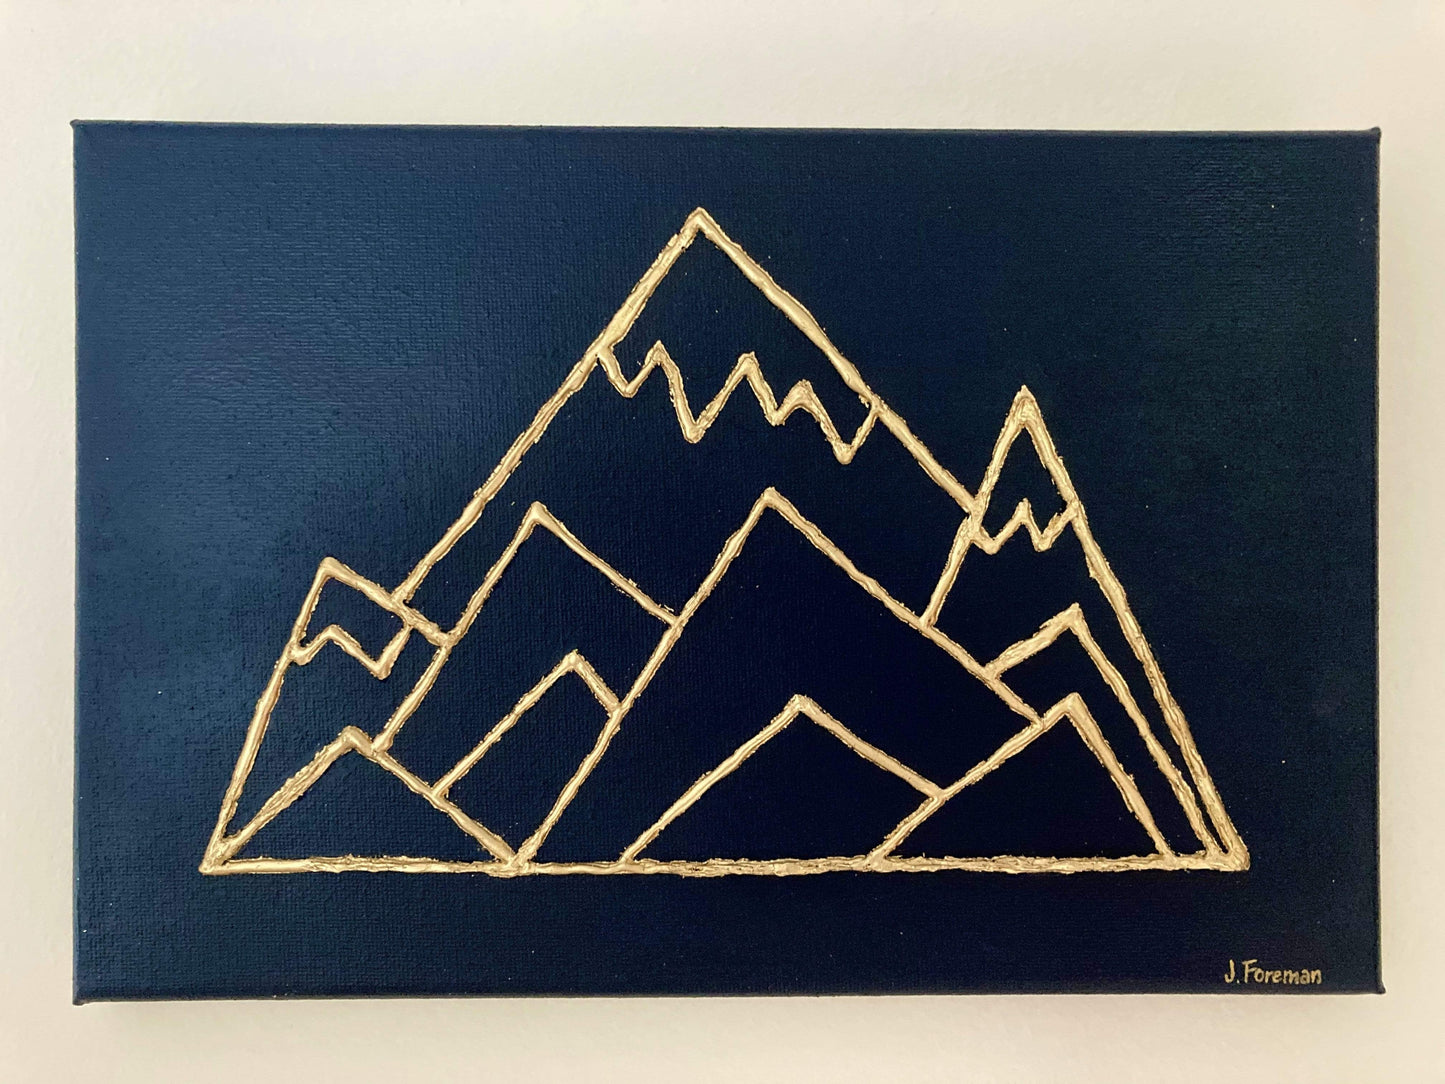 Geometric Mountain Range 3D Embossed Gold Leaf Canvas - Custom Converse Ltd.